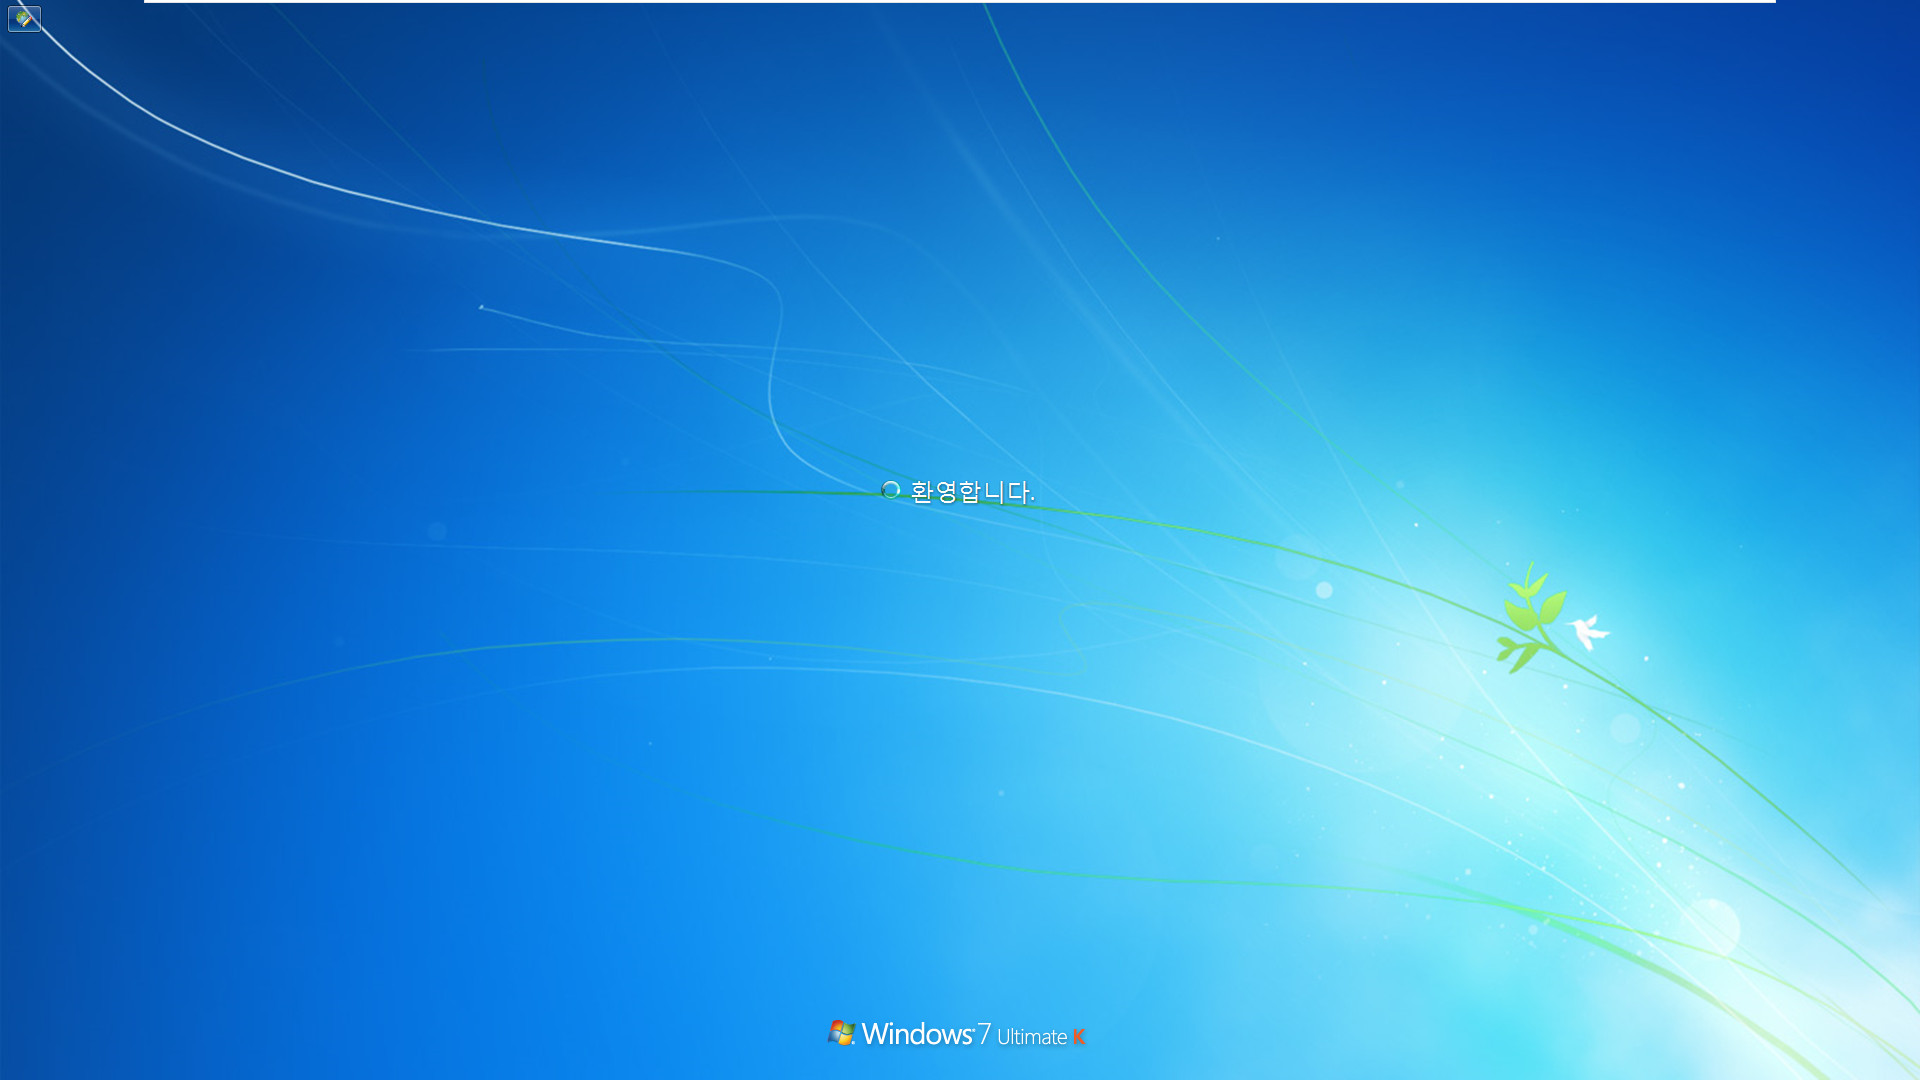 imageres.dll 윈도우 10 버전 1809와 윈도우 7 호환되도록 2가지 윈도우의 원본 imageres.dll을 합치고, 윈도우 7 라이브러리 안에 폴더 아이콘들 변경하여 테스트 2021-04-03_191451.jpg